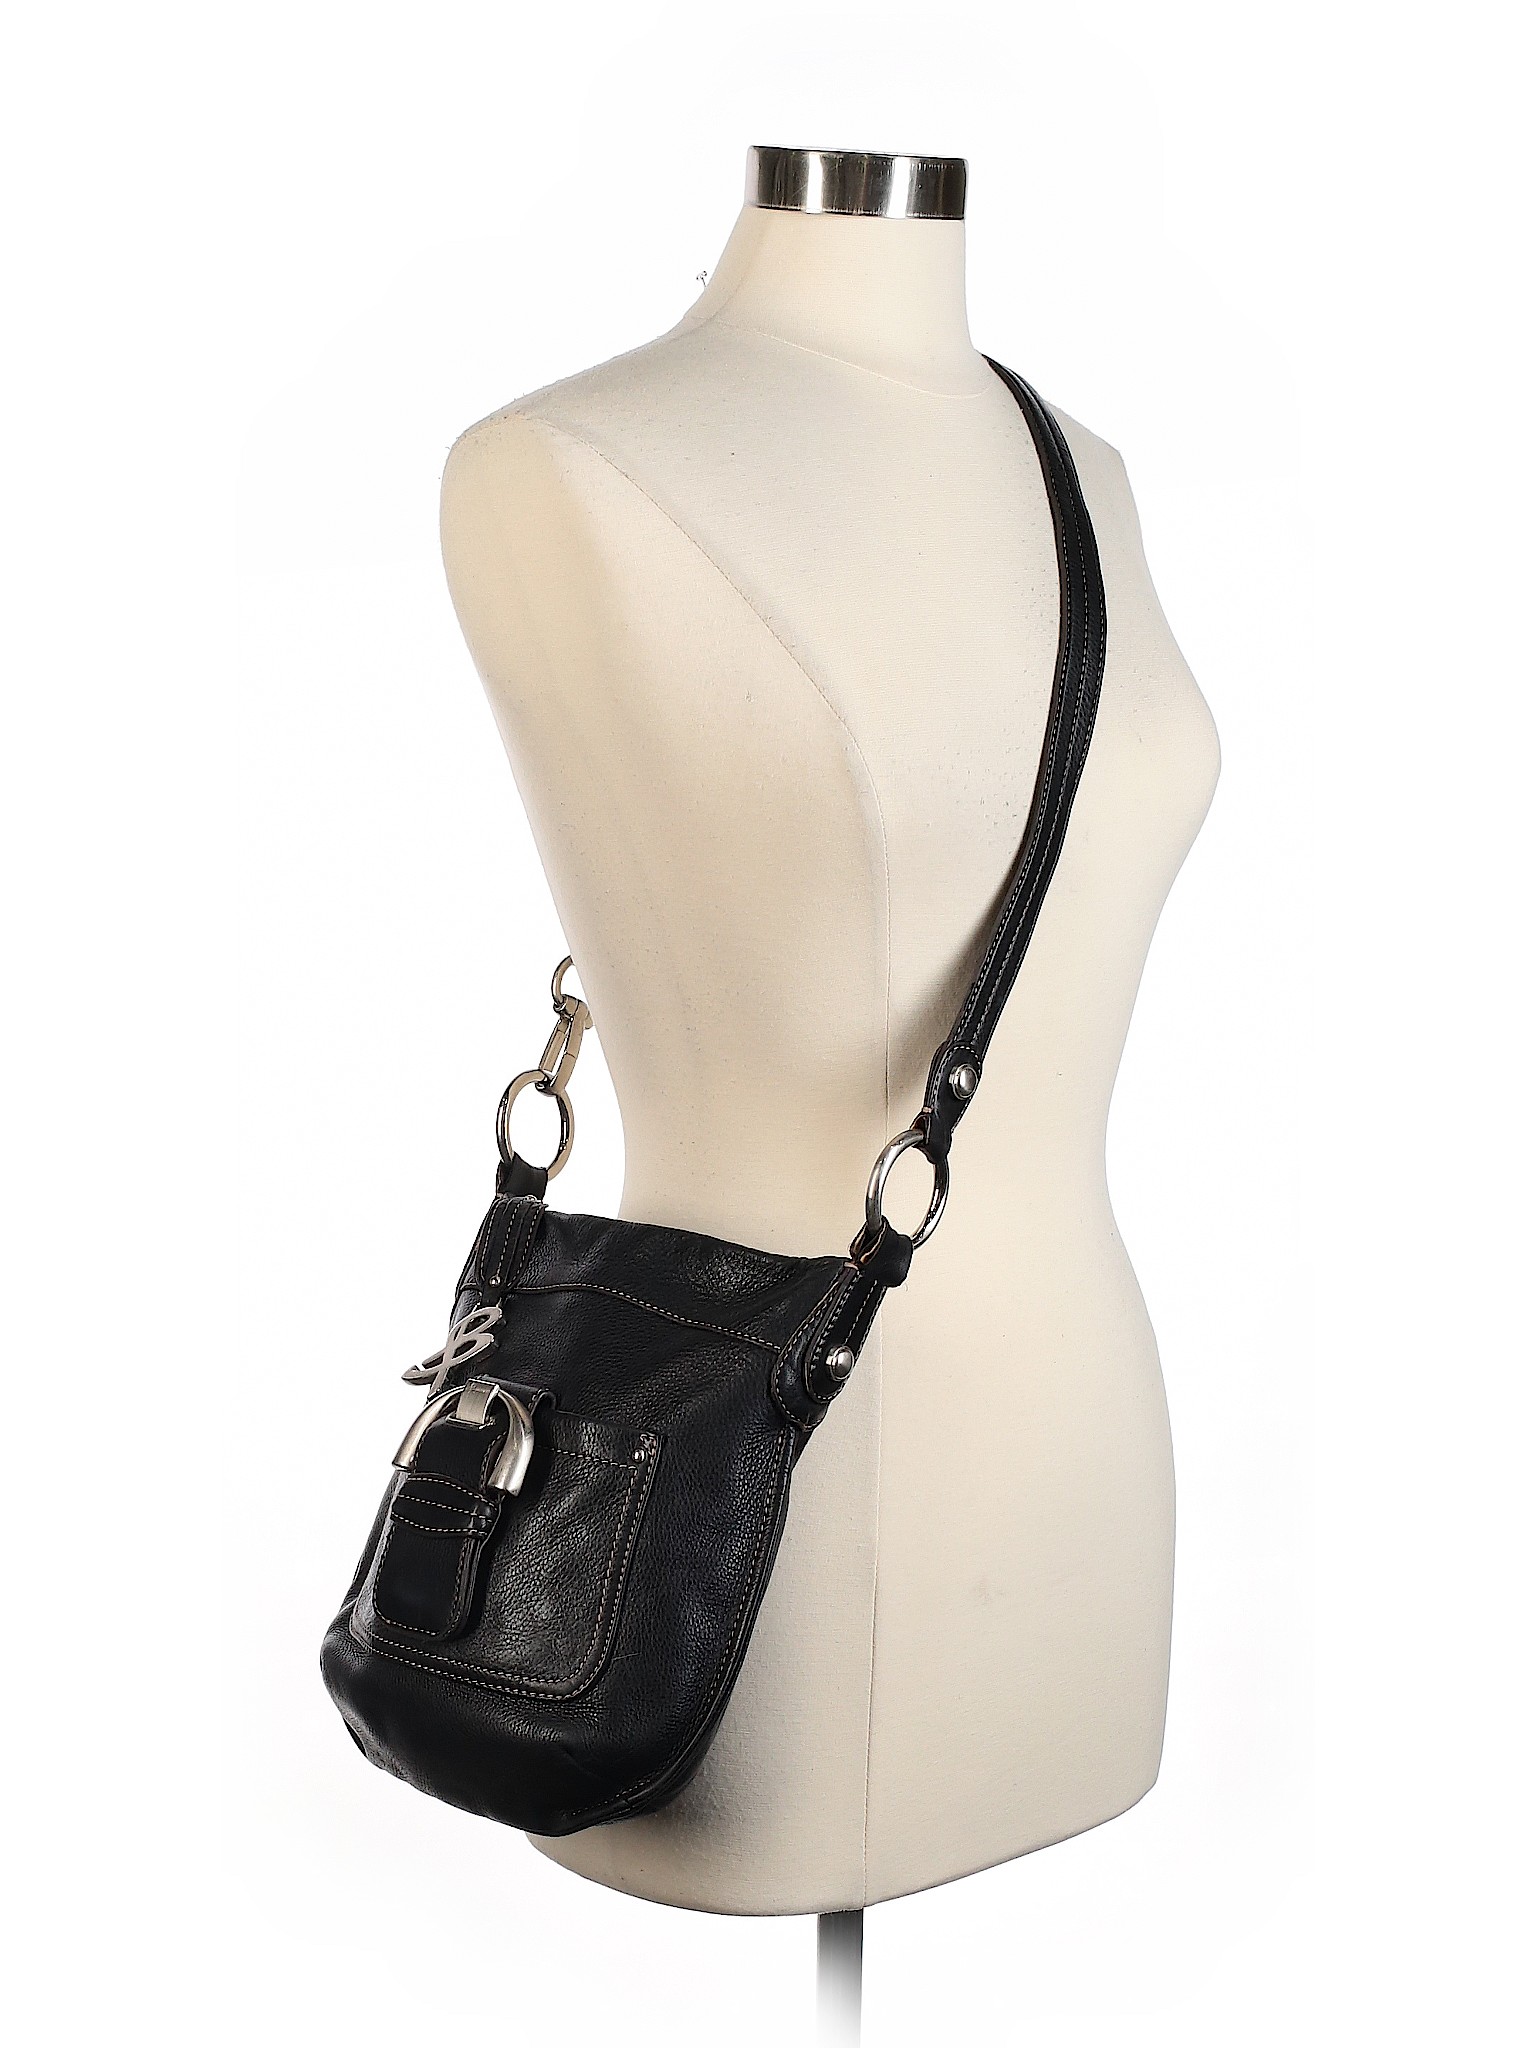 B Makowsky Women Black Leather Crossbody Bag One Size | eBay